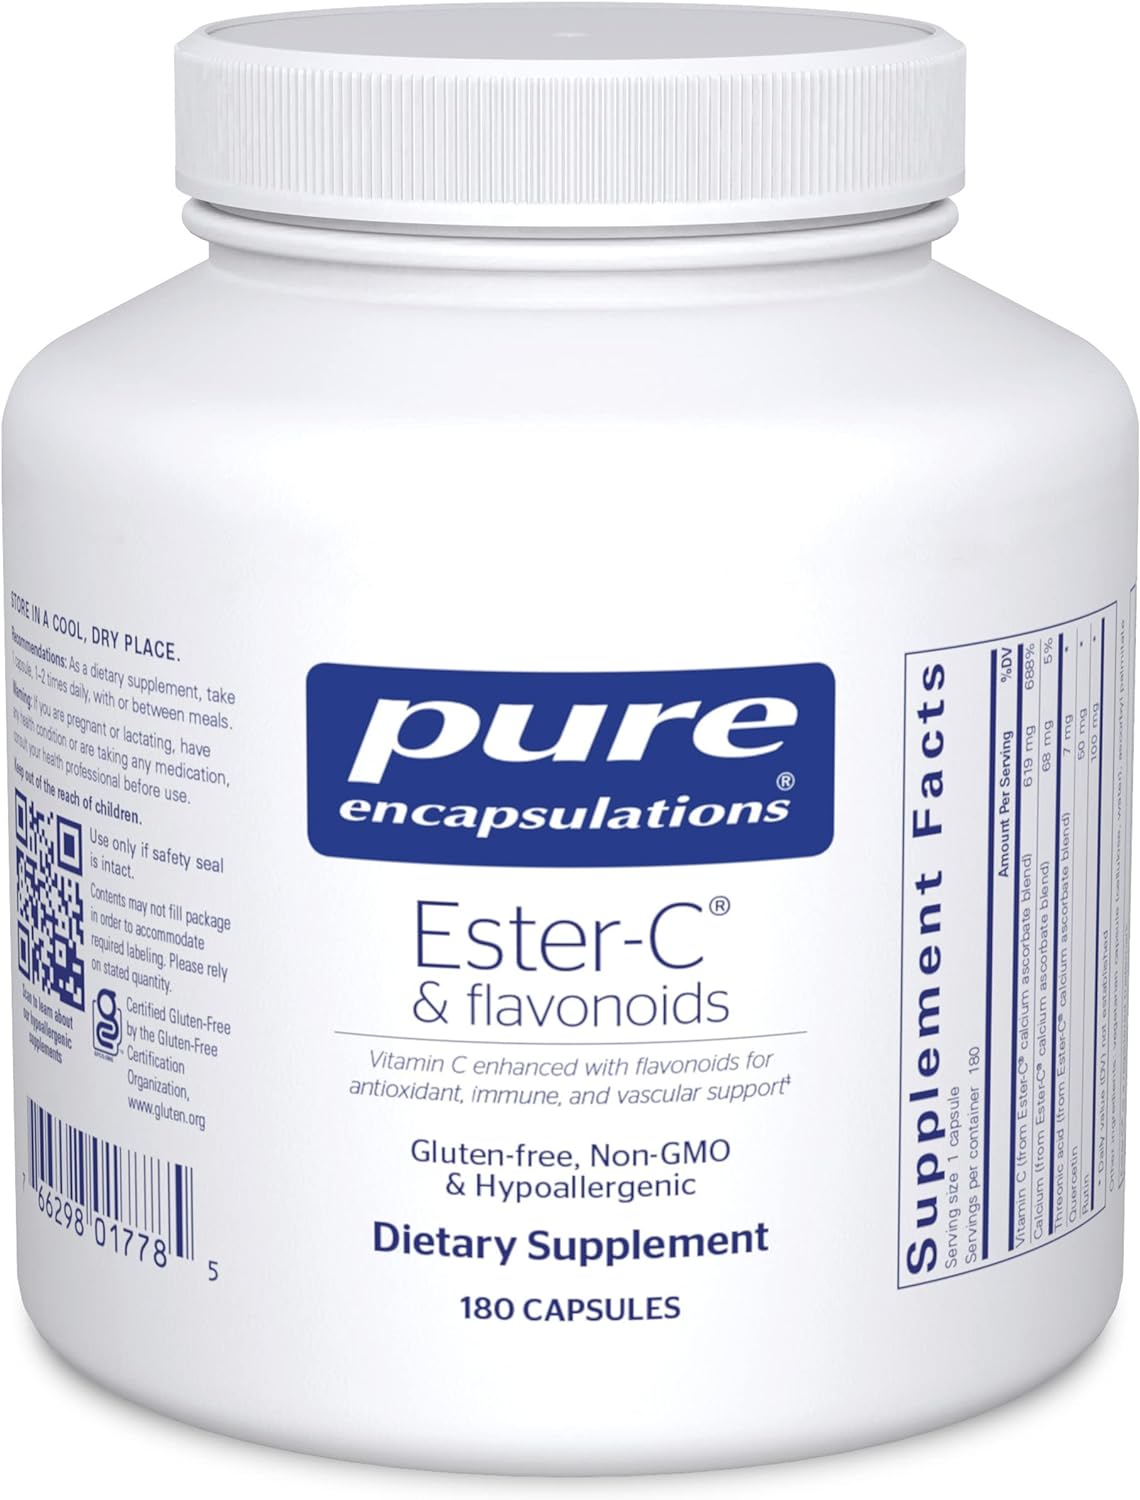 Pure Encapsulations Ester-C & Flavonoids | Vitamin C Supplement for An